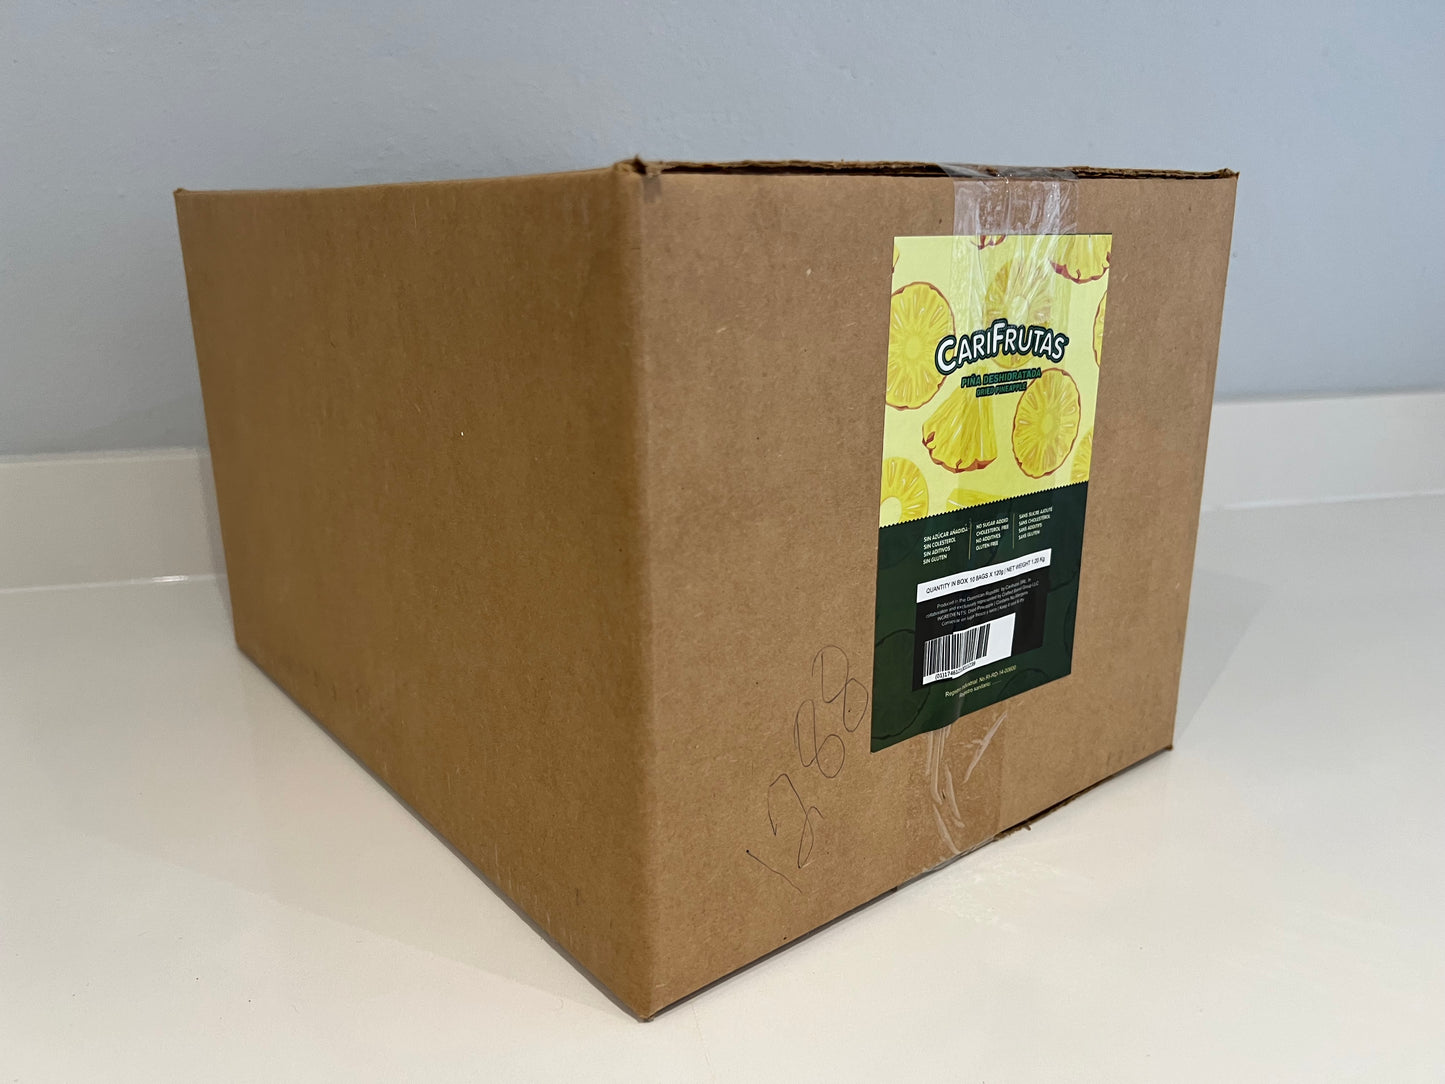 Dehydrated pineapple case (10 packages )/ Piña desidratada caja (10 bolsas))